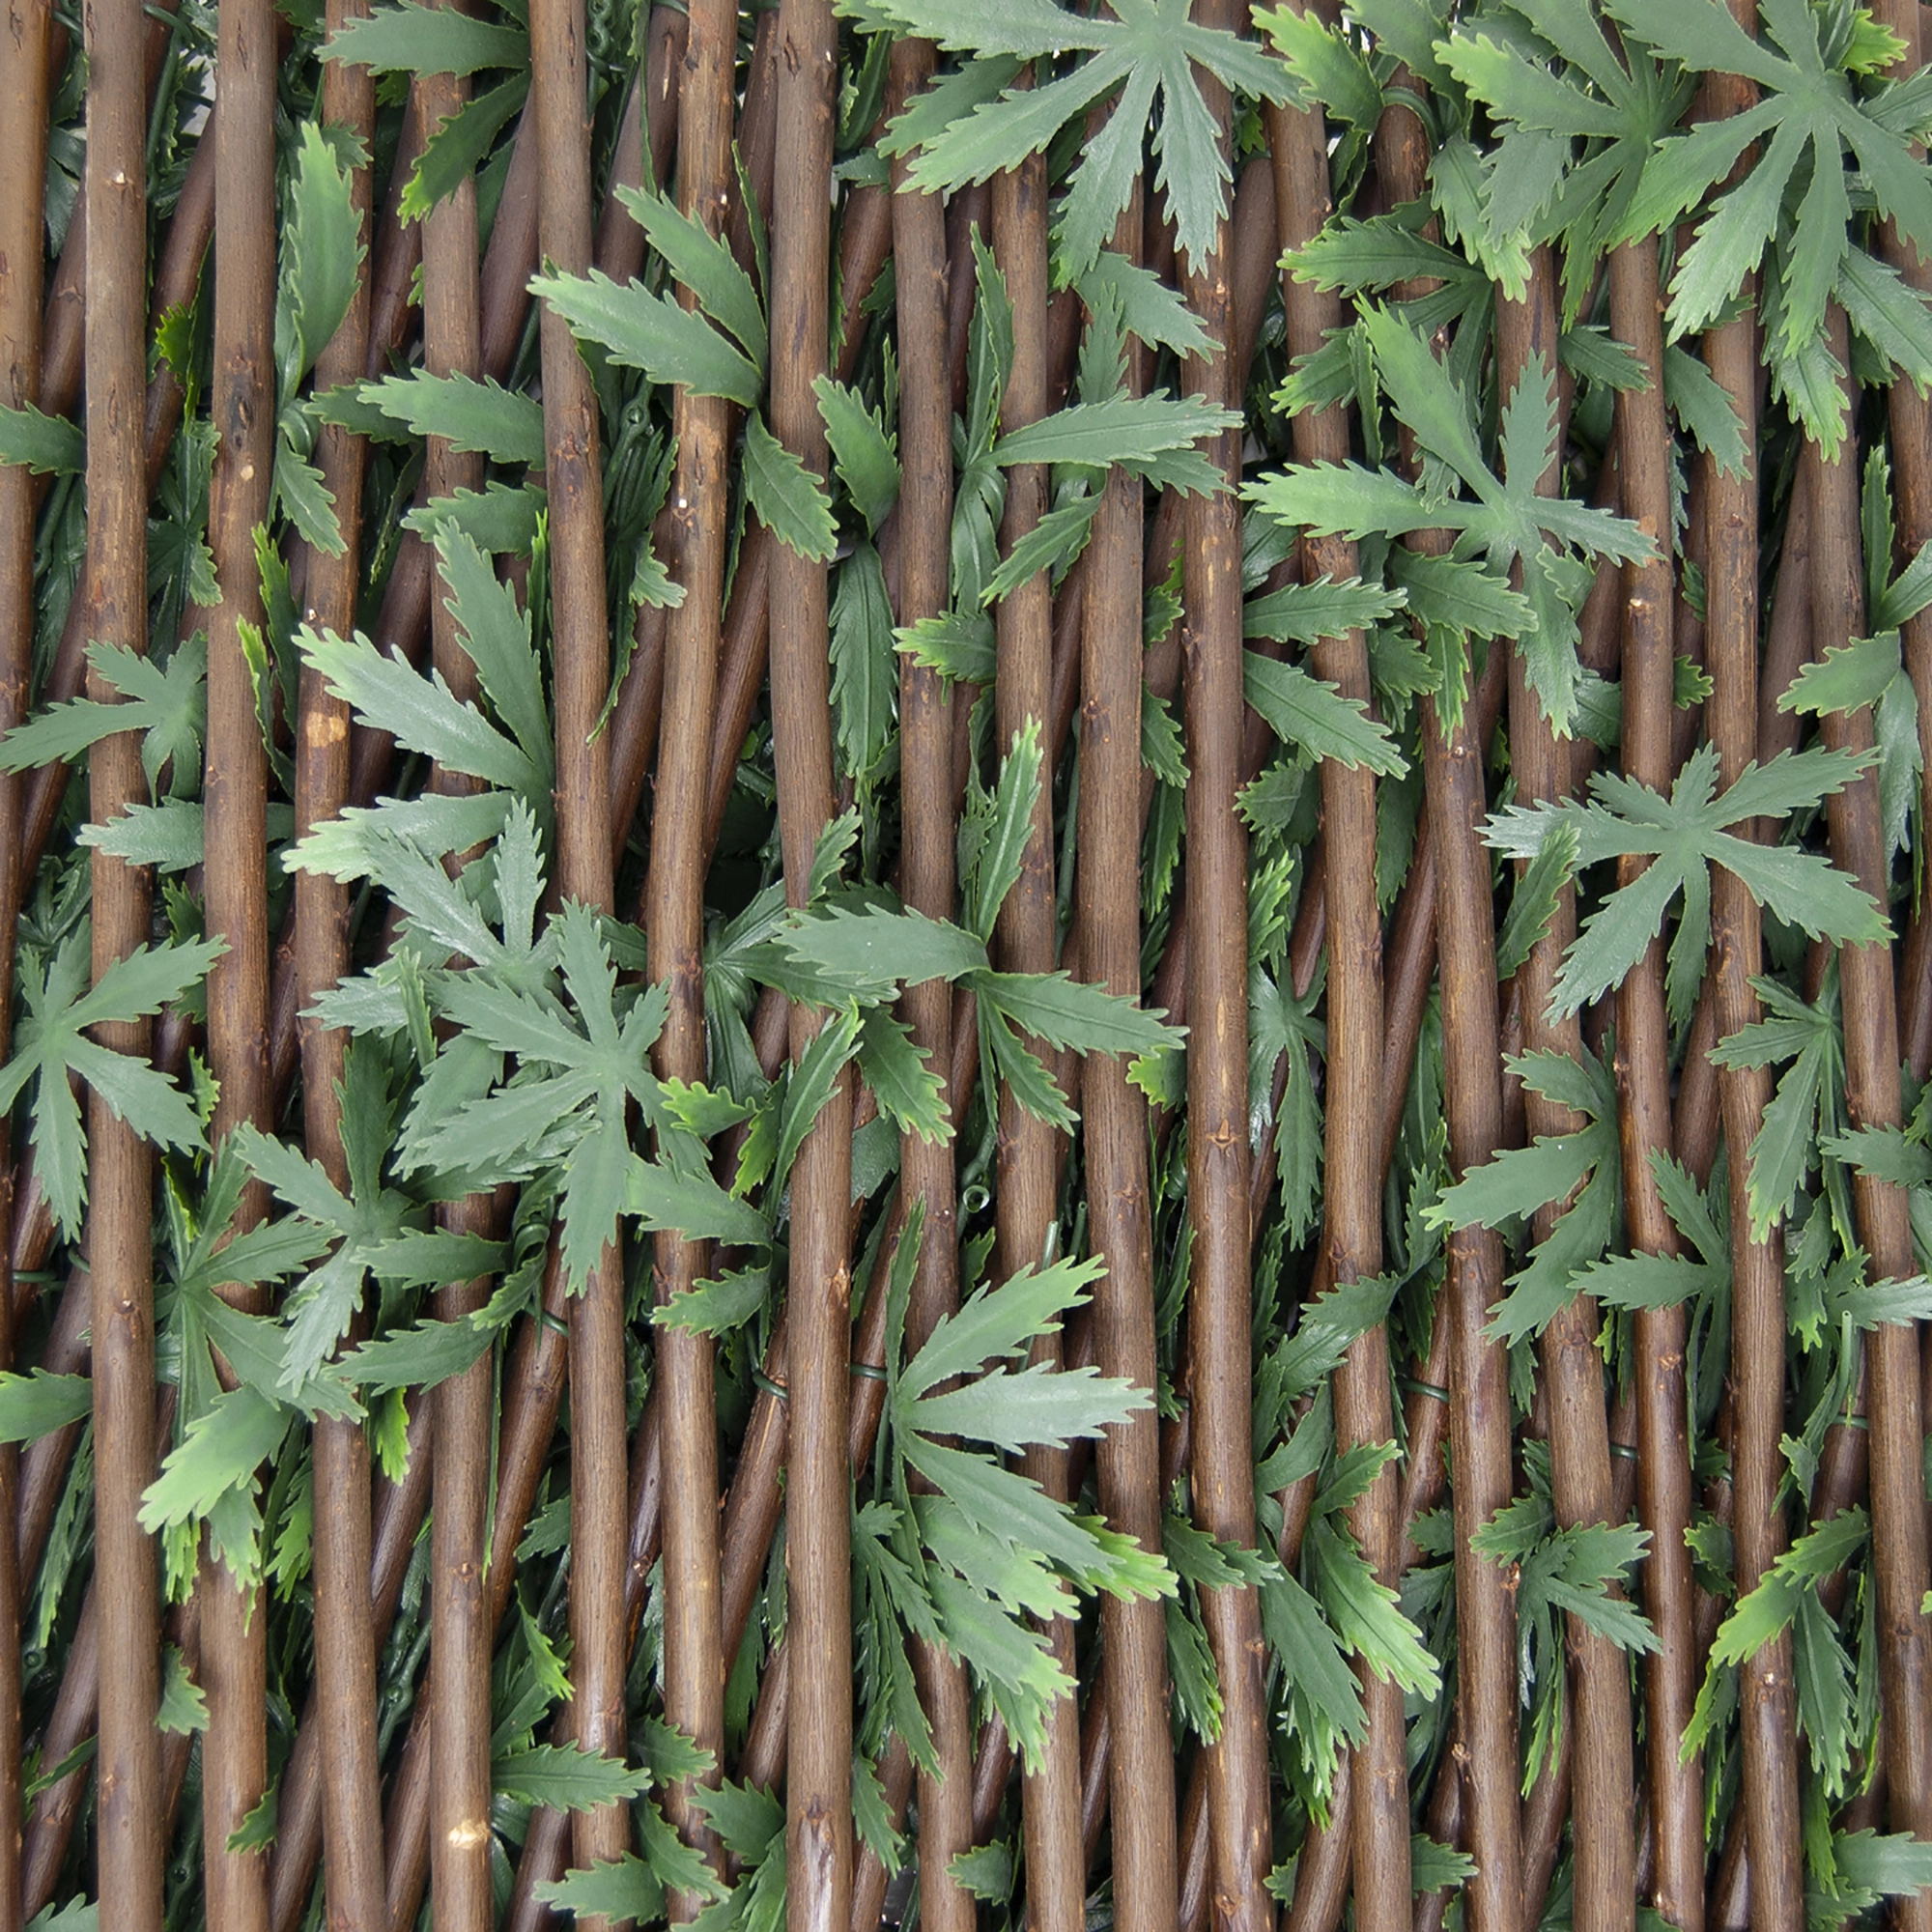 Siepe artificiale con foglie 3D in salice Acer Palmatum 1x2 m, verde